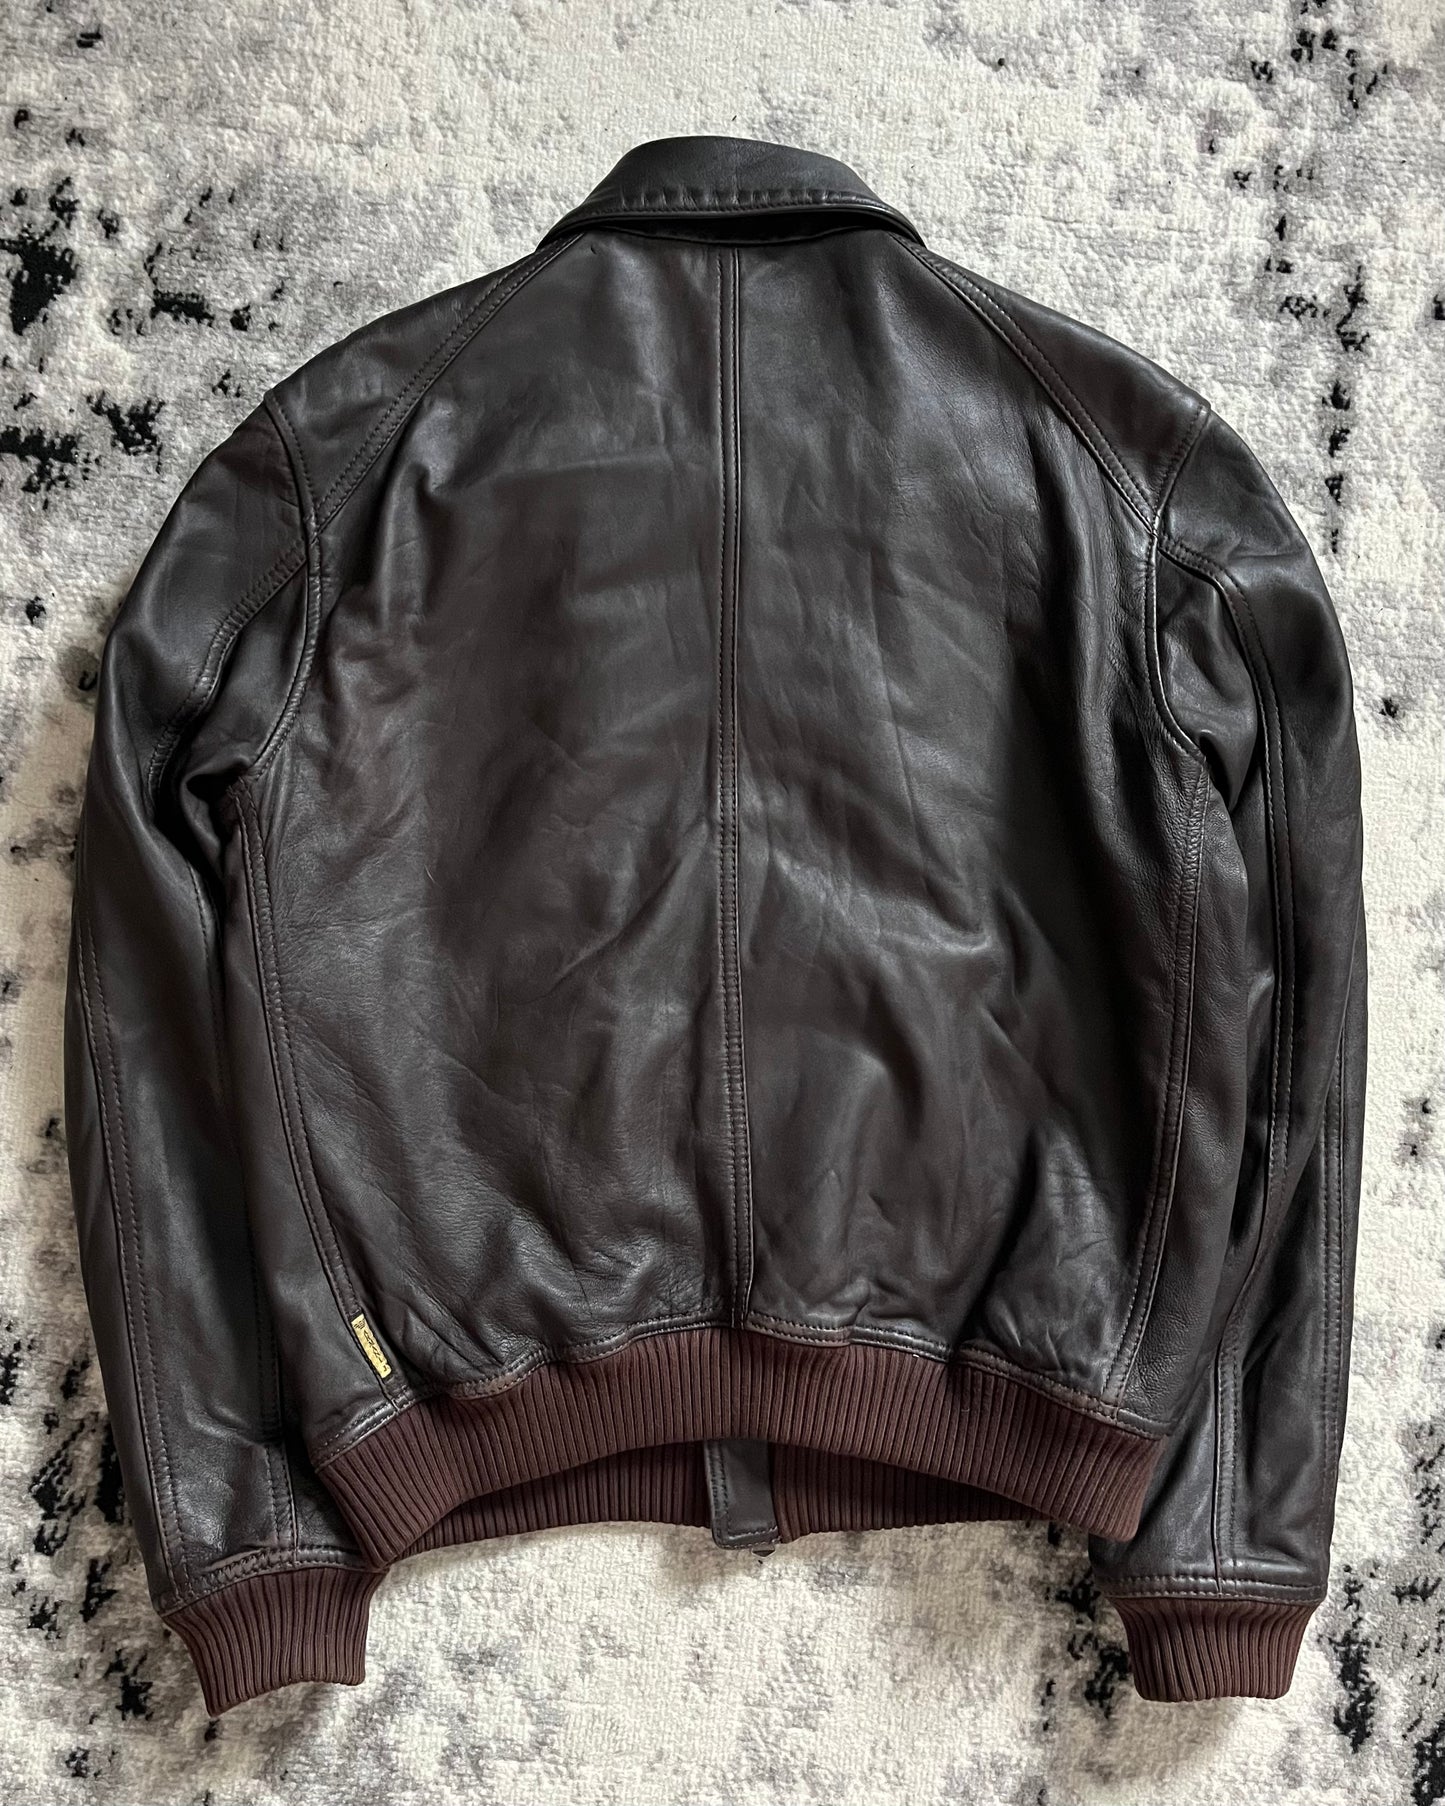 AW2007 Armani Brown Utility Leather Jacket (M)